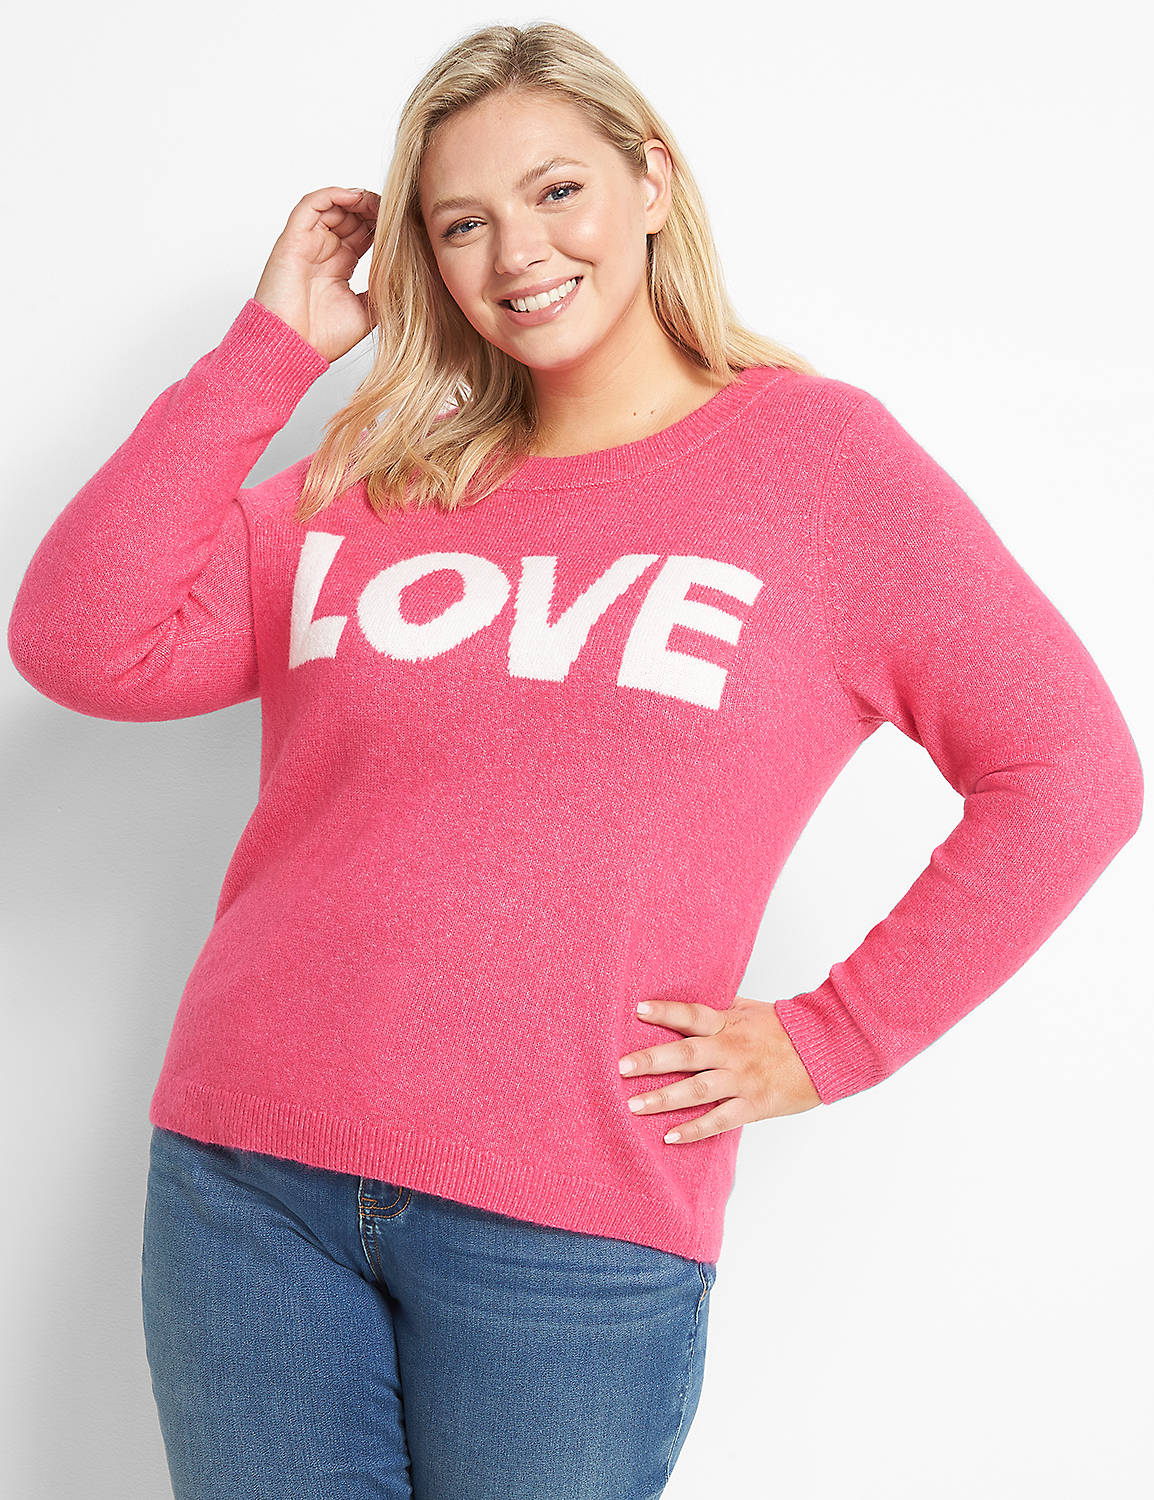 Crew-Neck Love Sweater Product Image 1